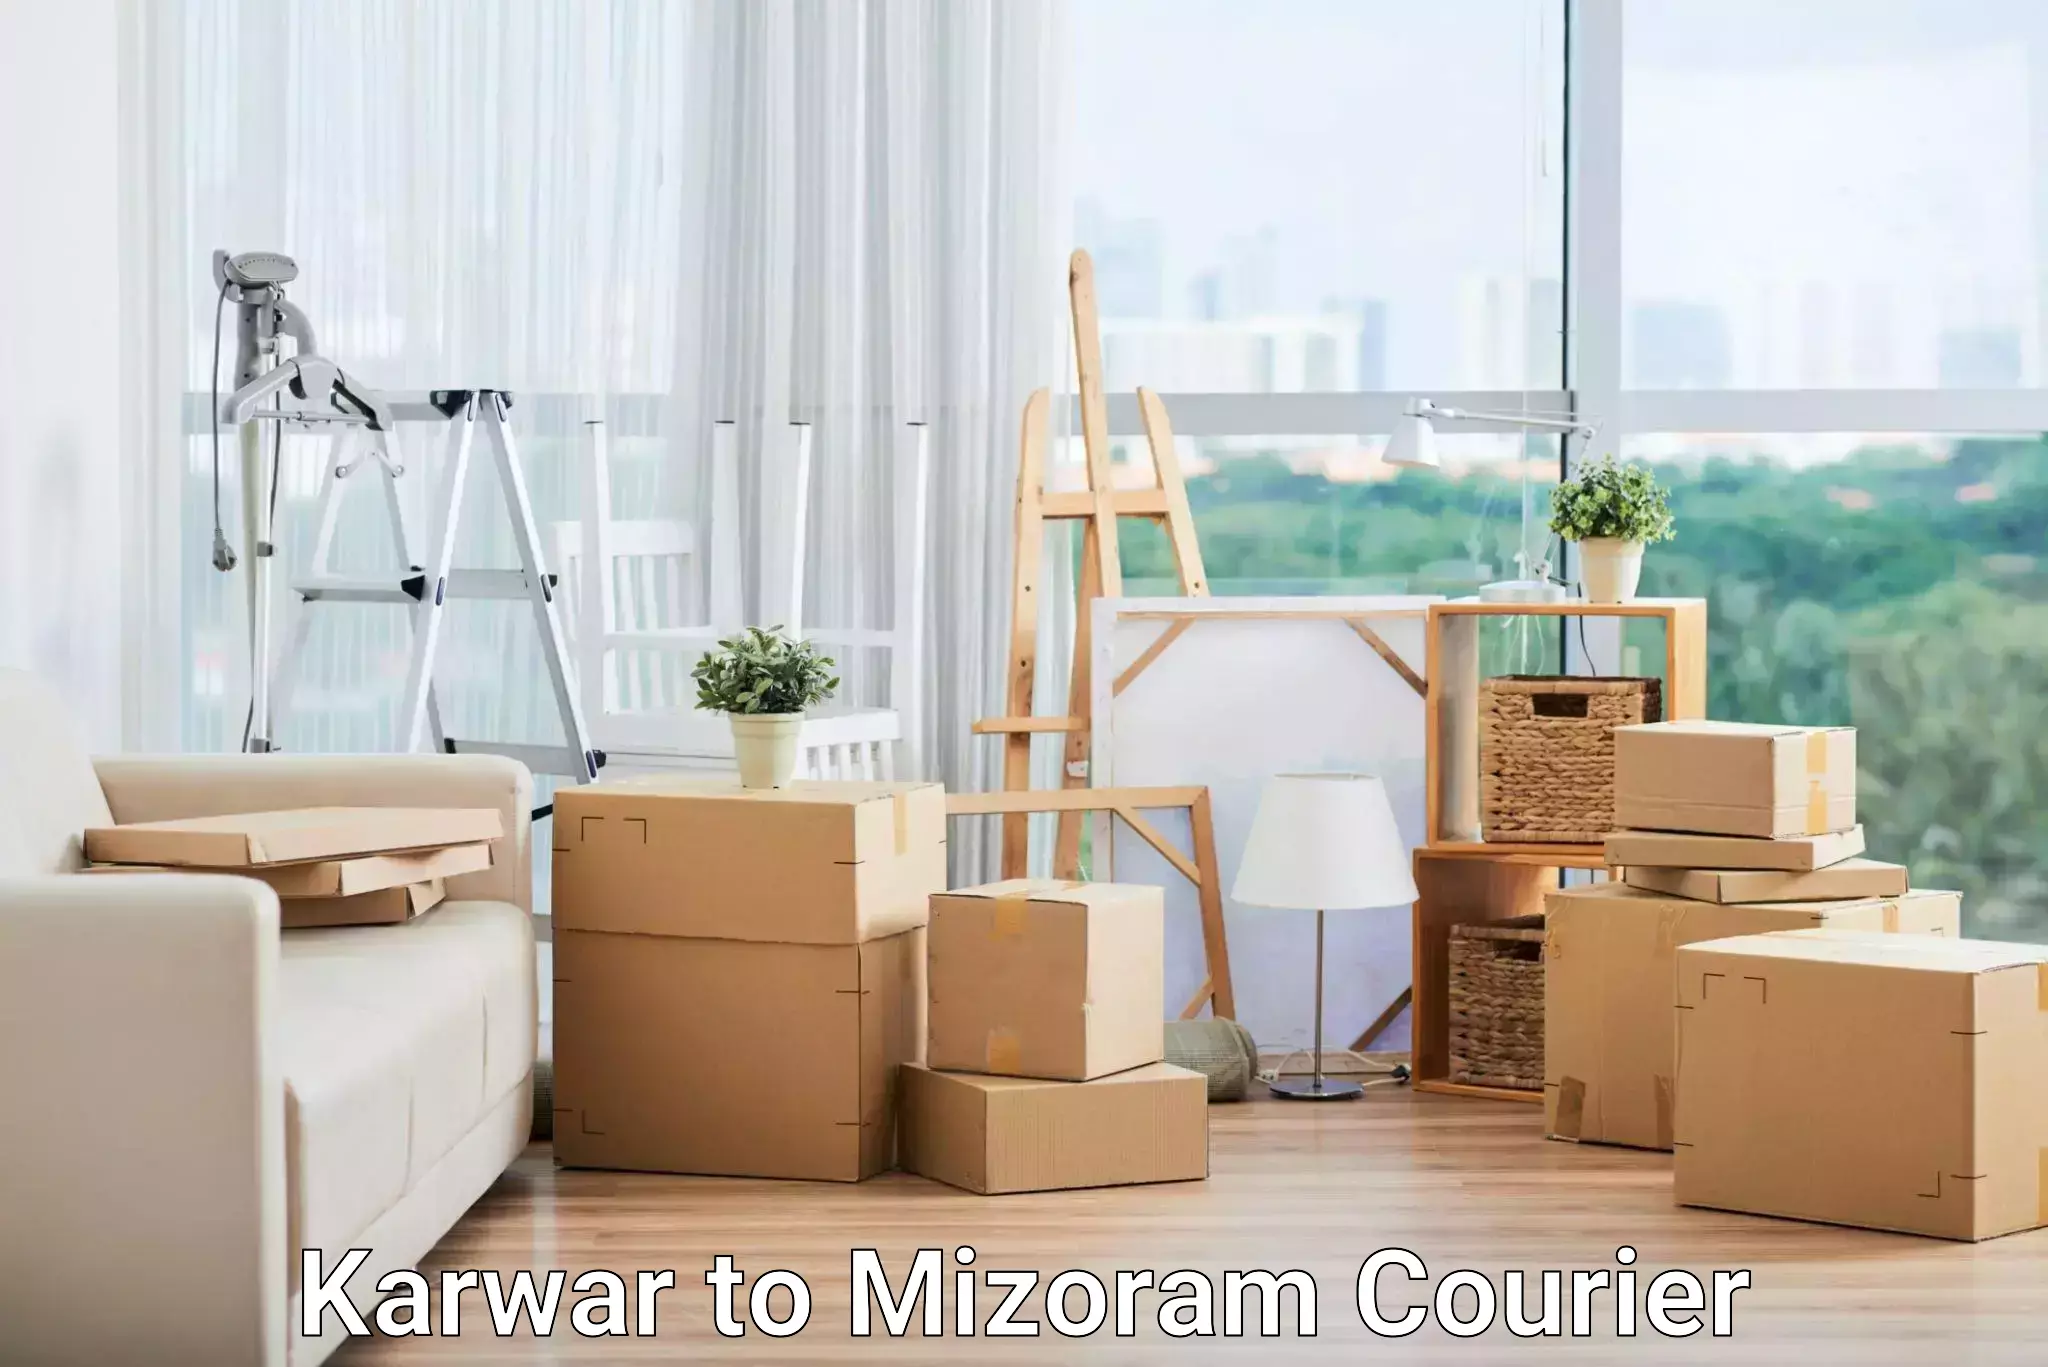 State-of-the-art courier technology Karwar to Mizoram